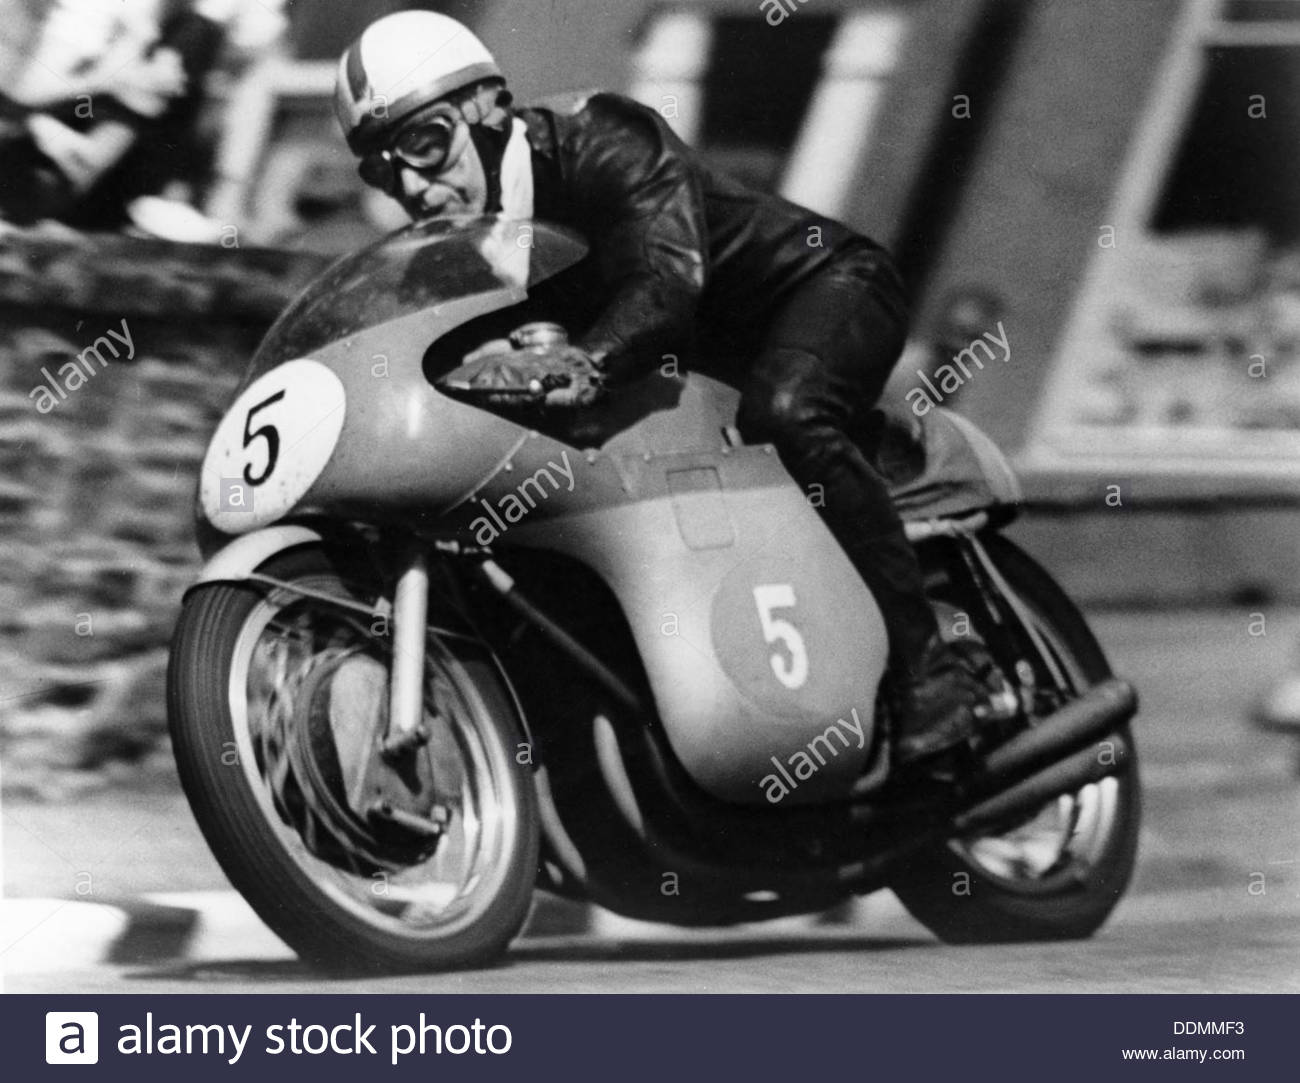 John Surtees winning the Isle of Man Junior TT on an MV Agusta in 1959.